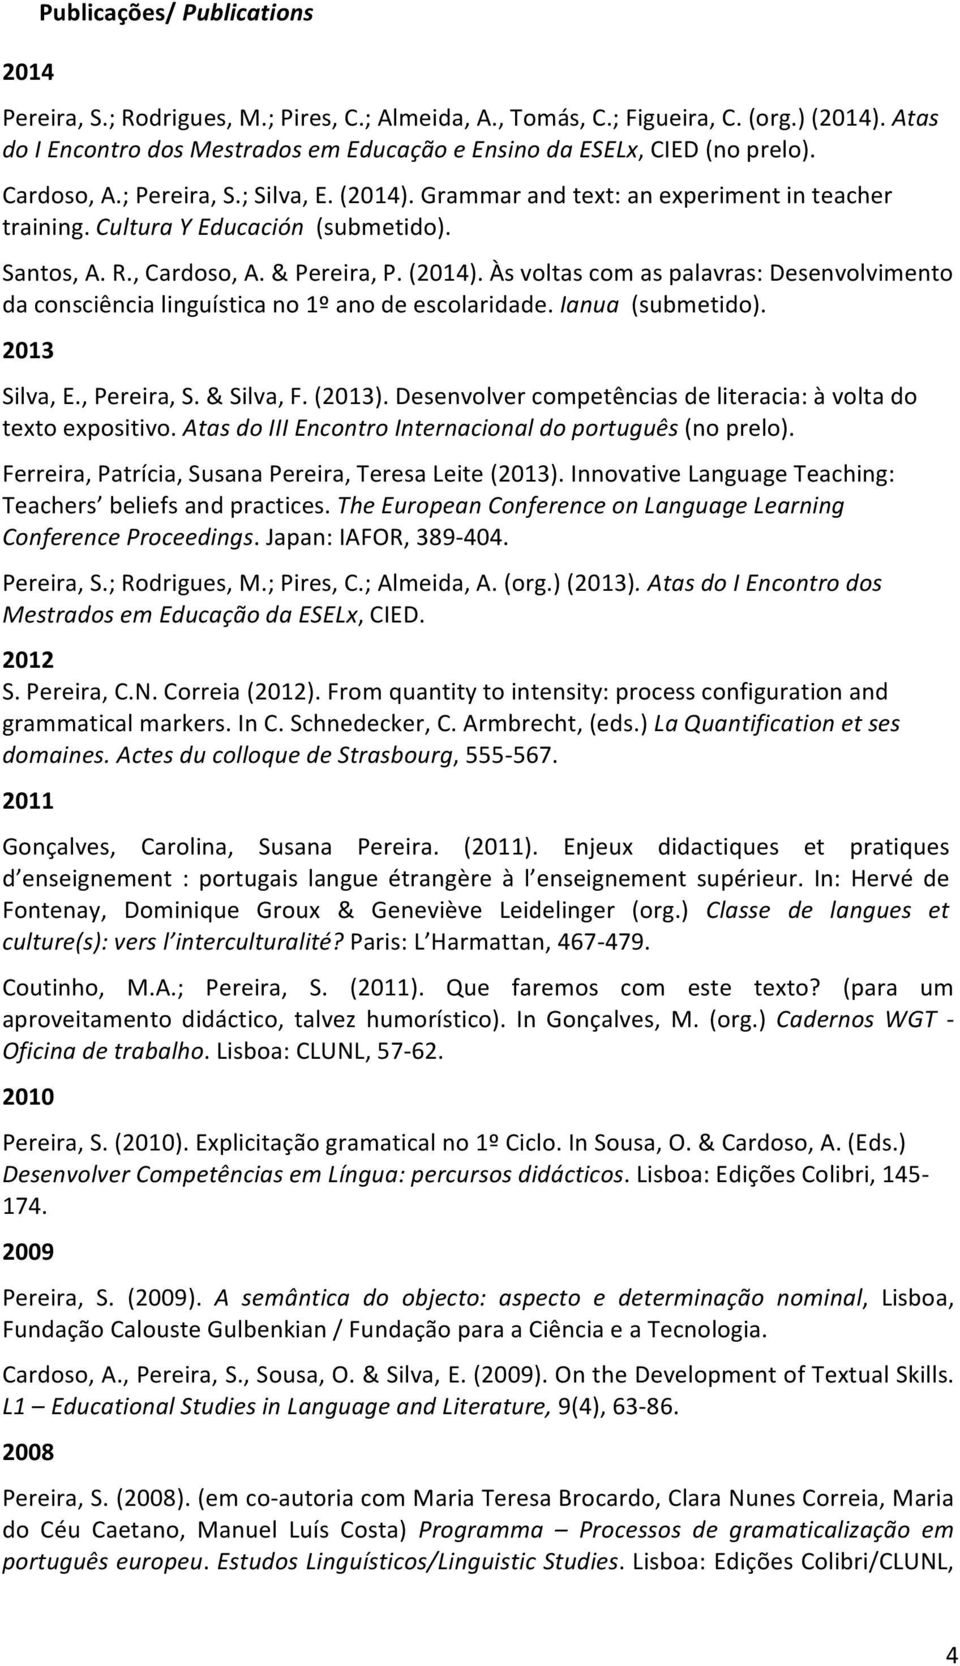 ianua(submetido). 2013 Silva,E.,Pereira,S.&Silva,F.(2013).Desenvolvercompetênciasdeliteracia:àvoltado textoexpositivo.atasdoiiiencontrointernacionaldoportuguês(noprelo).